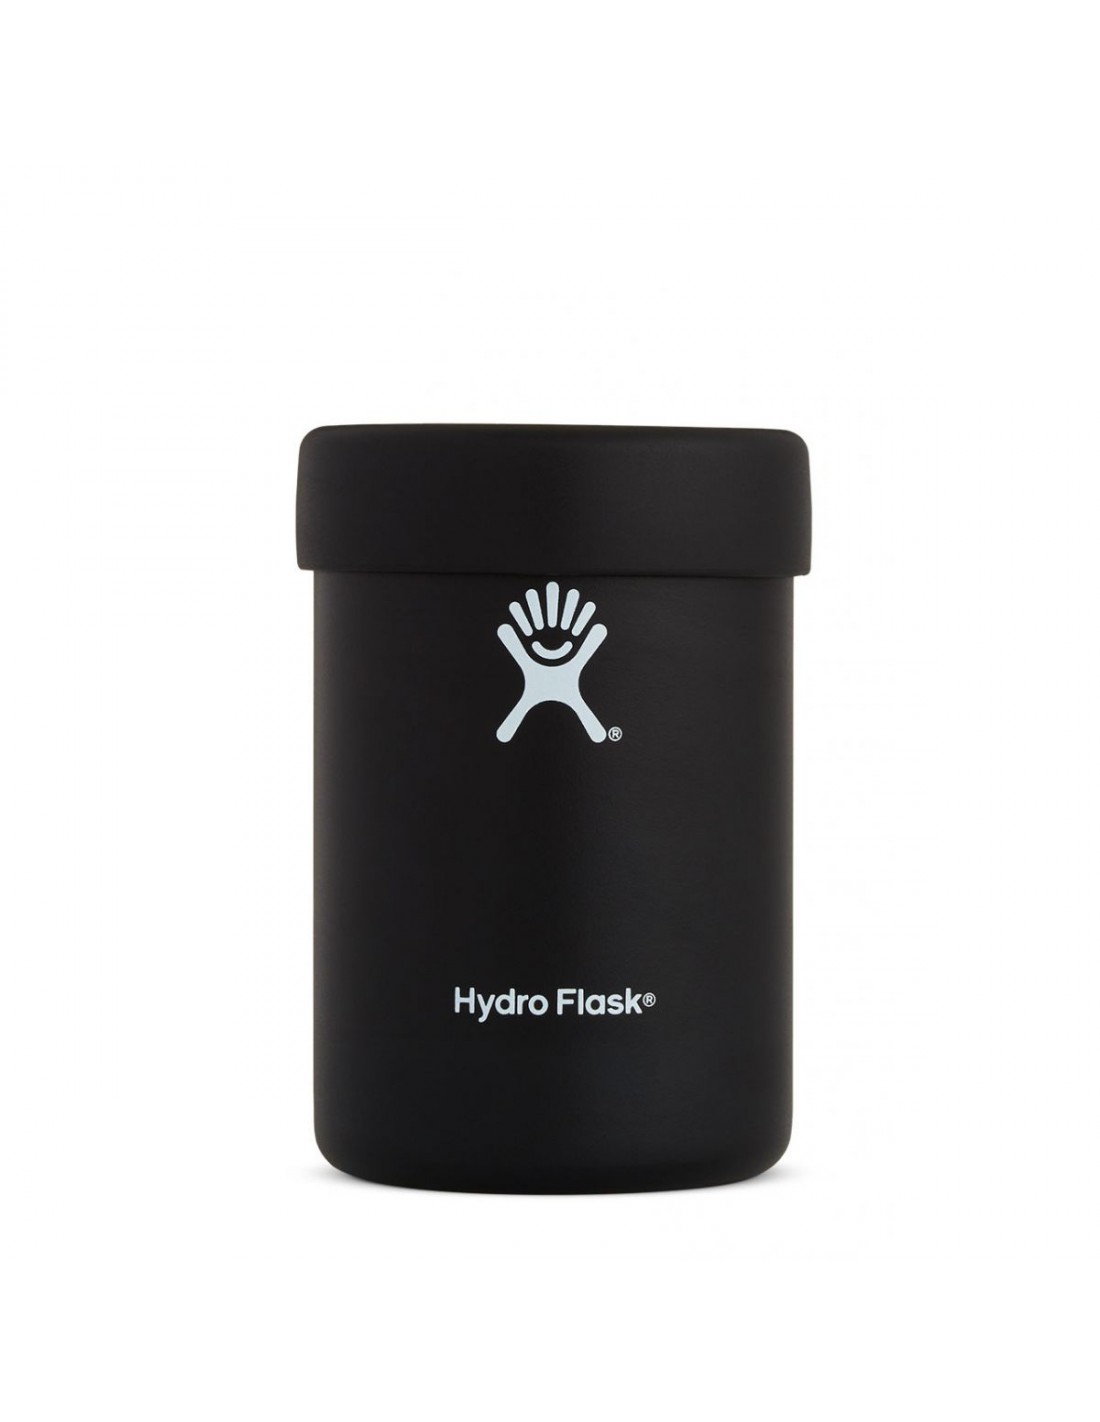 Hydro Flask 12 oz (355 ml) Cooler Cup, Black von Hydro Flask